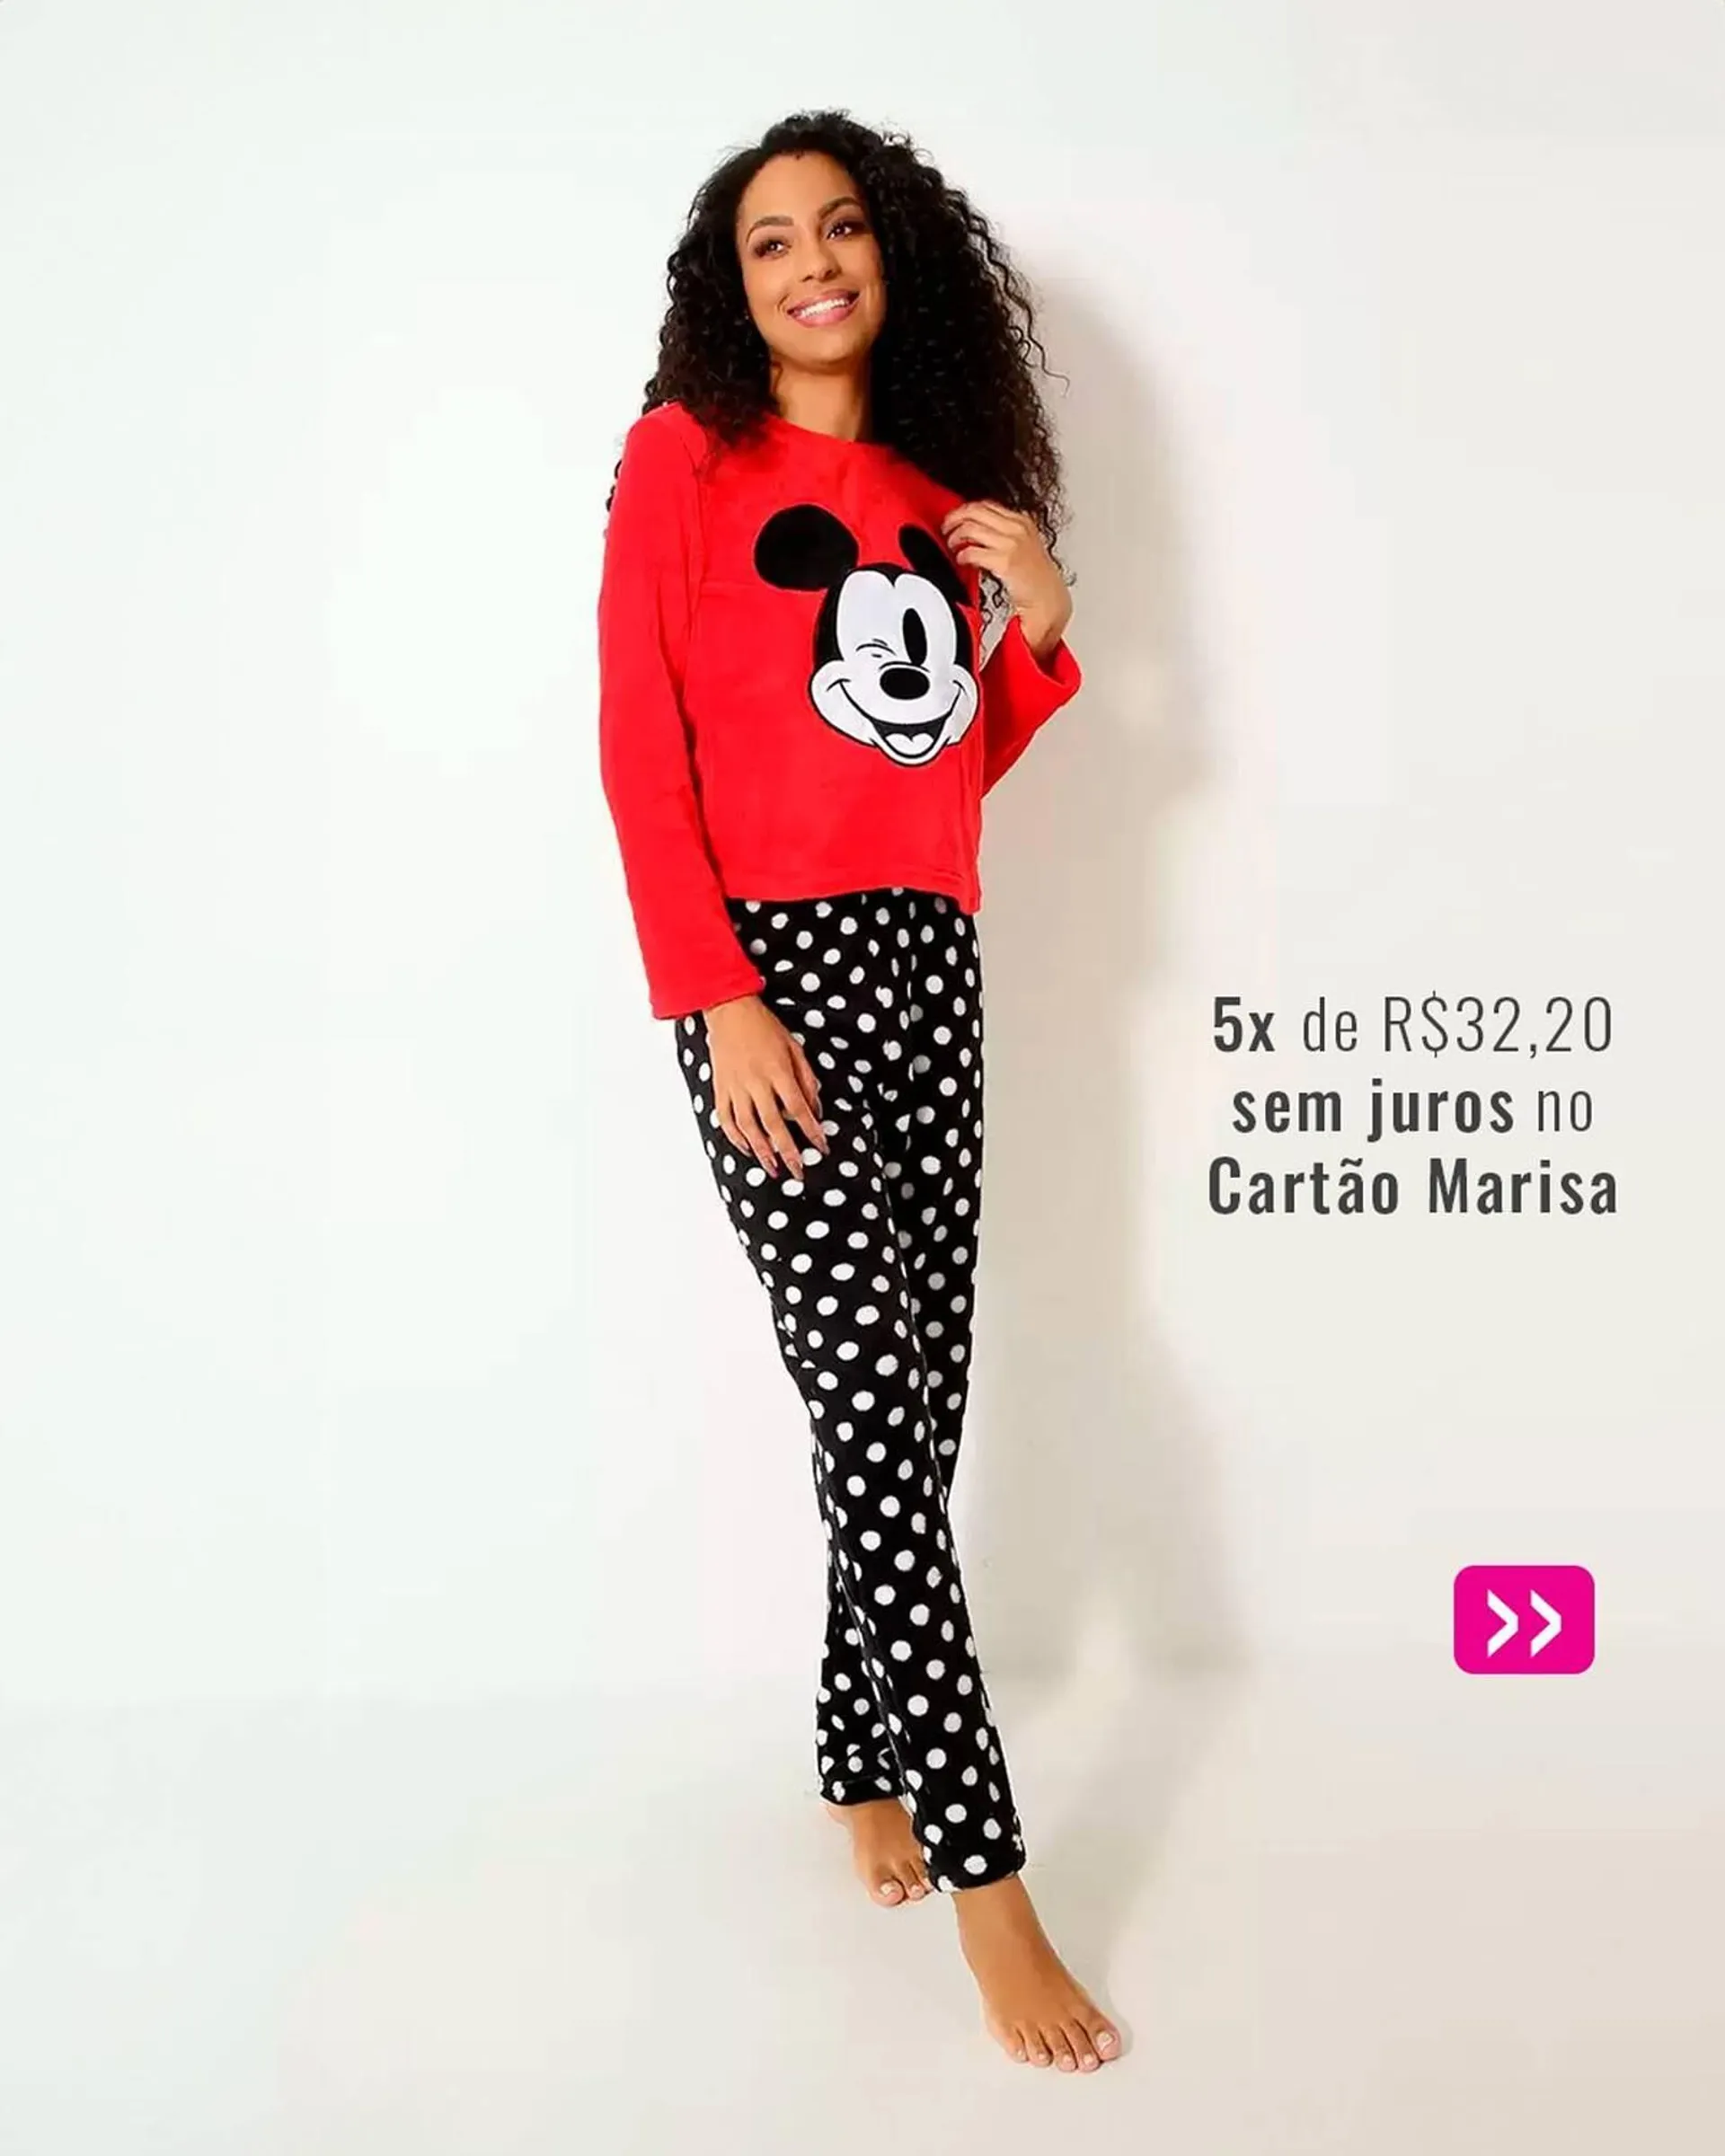 Catálogo Marisa - 5